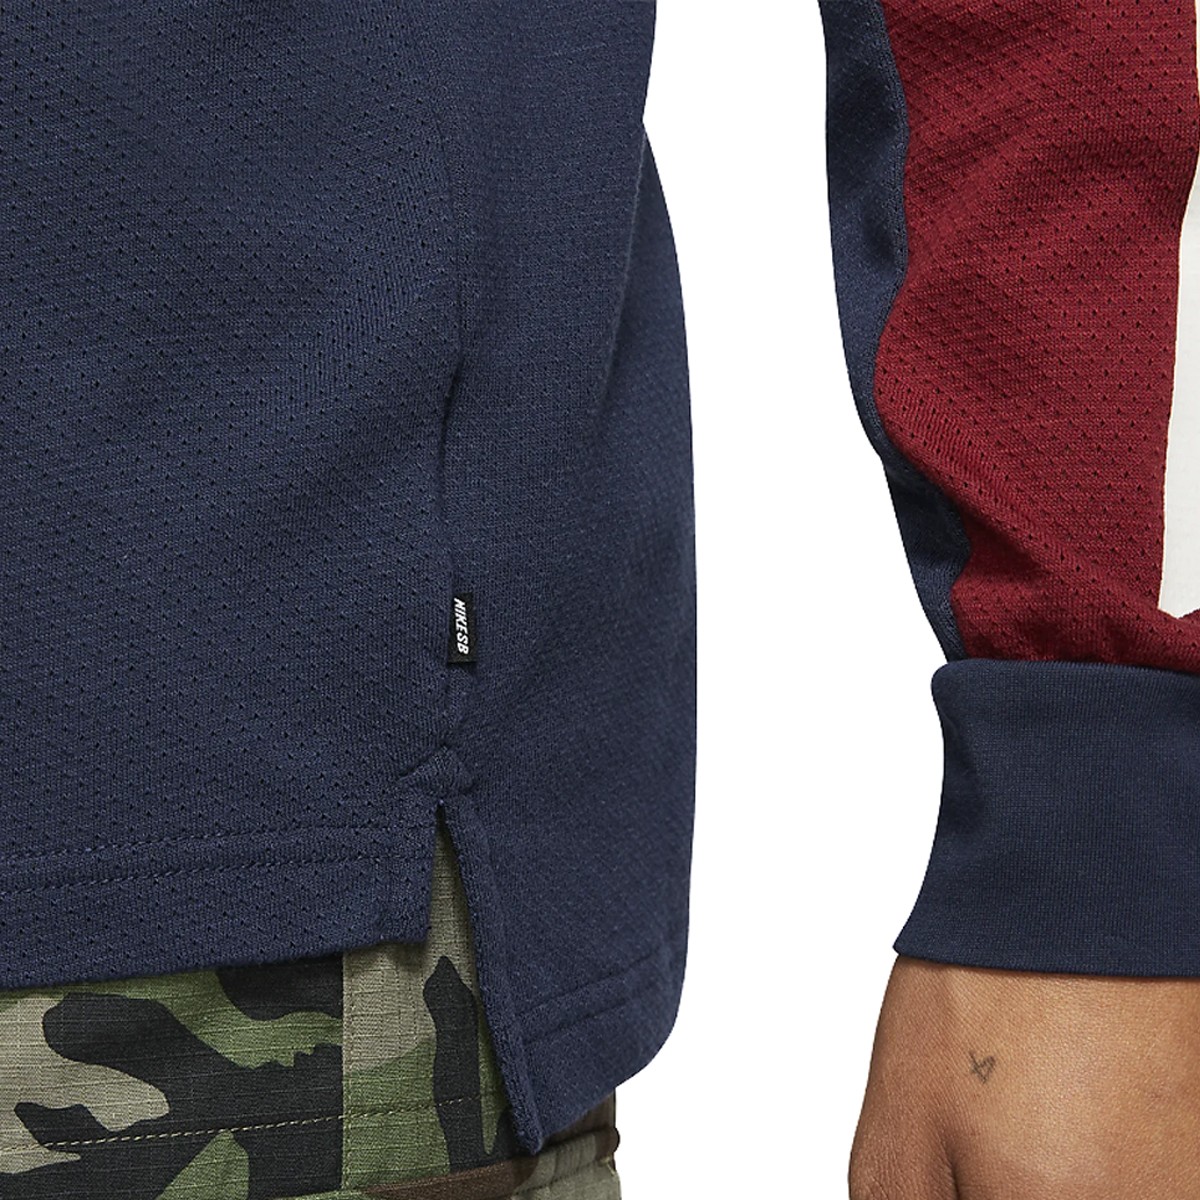 Nike SB Mesh Long Sleeve Top GFX Sweatshirt BV0110-451